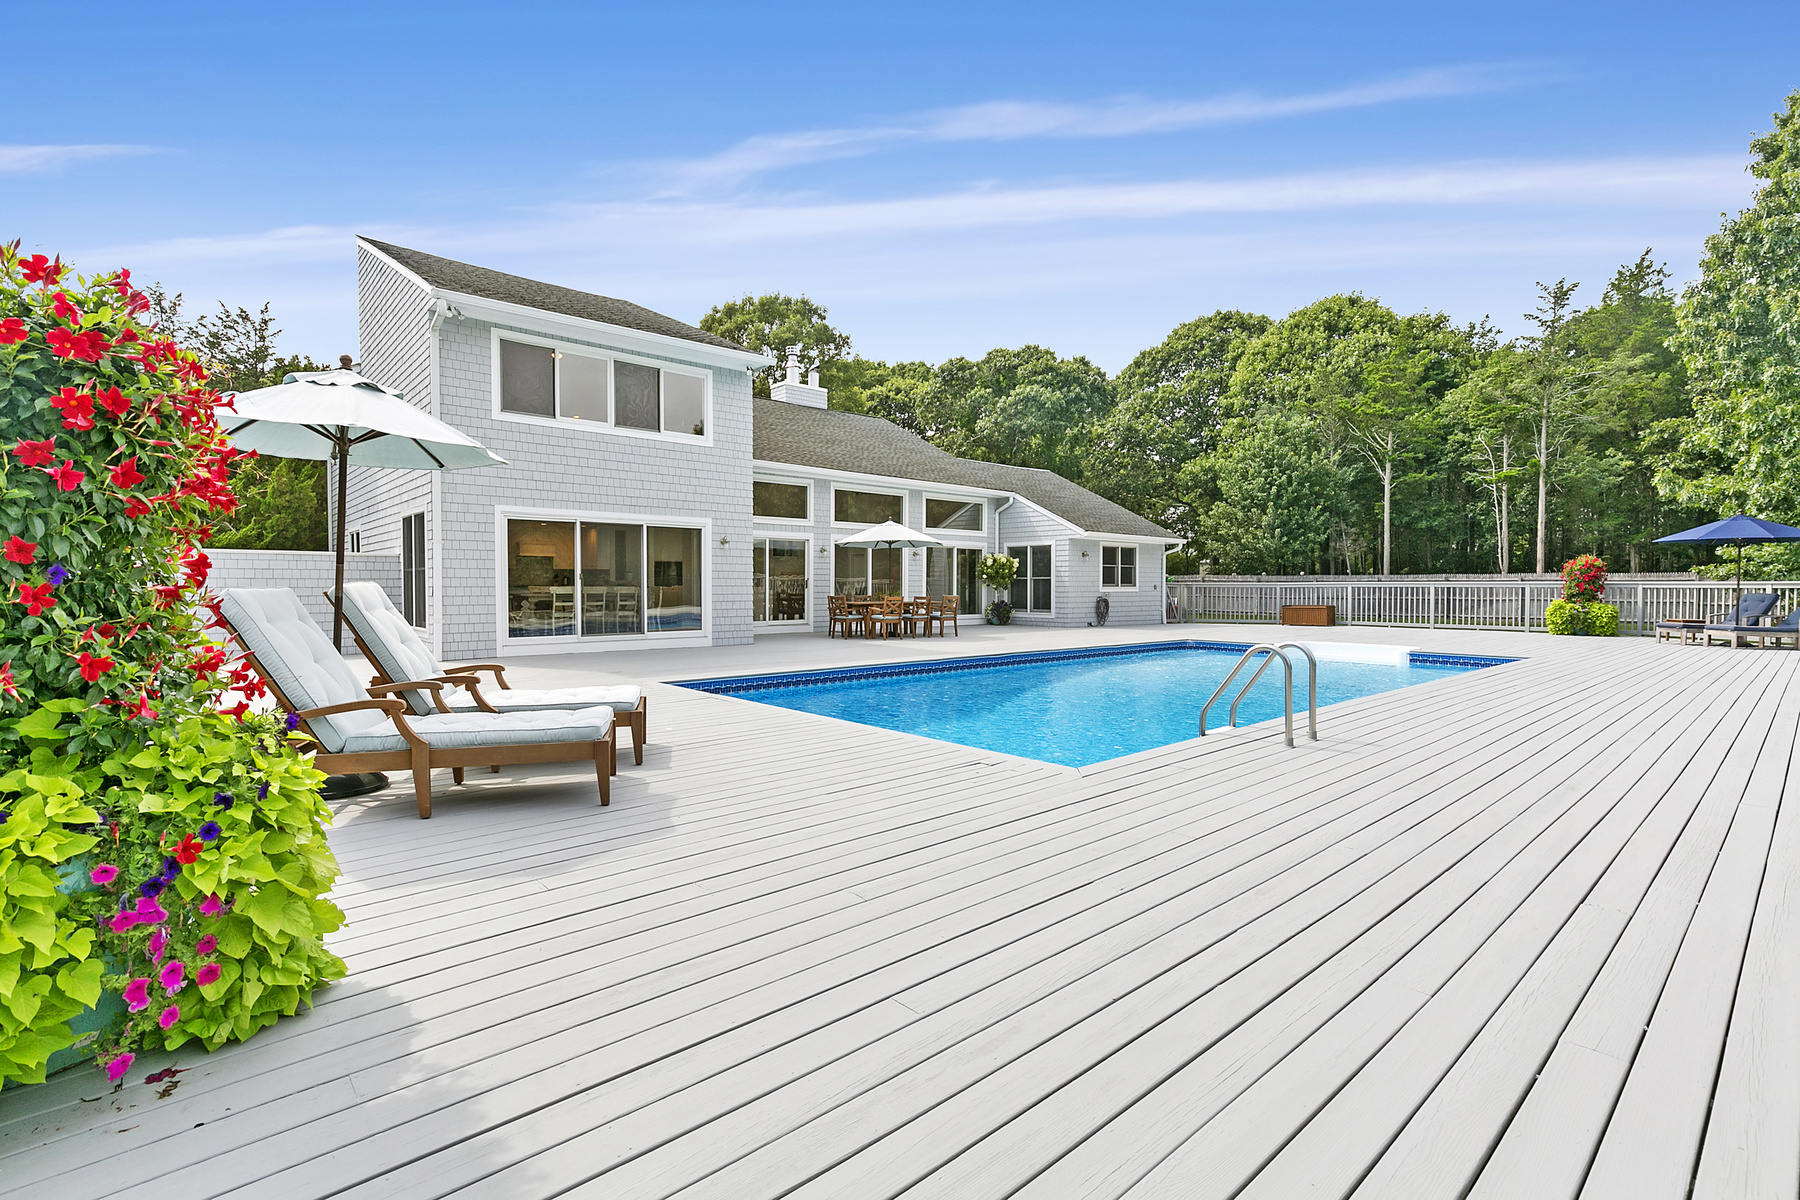 Rental Property at Southampton, Southampton, Hamptons, NY - Bedrooms: 4 
Bathrooms: 4  - $70,000 MO.